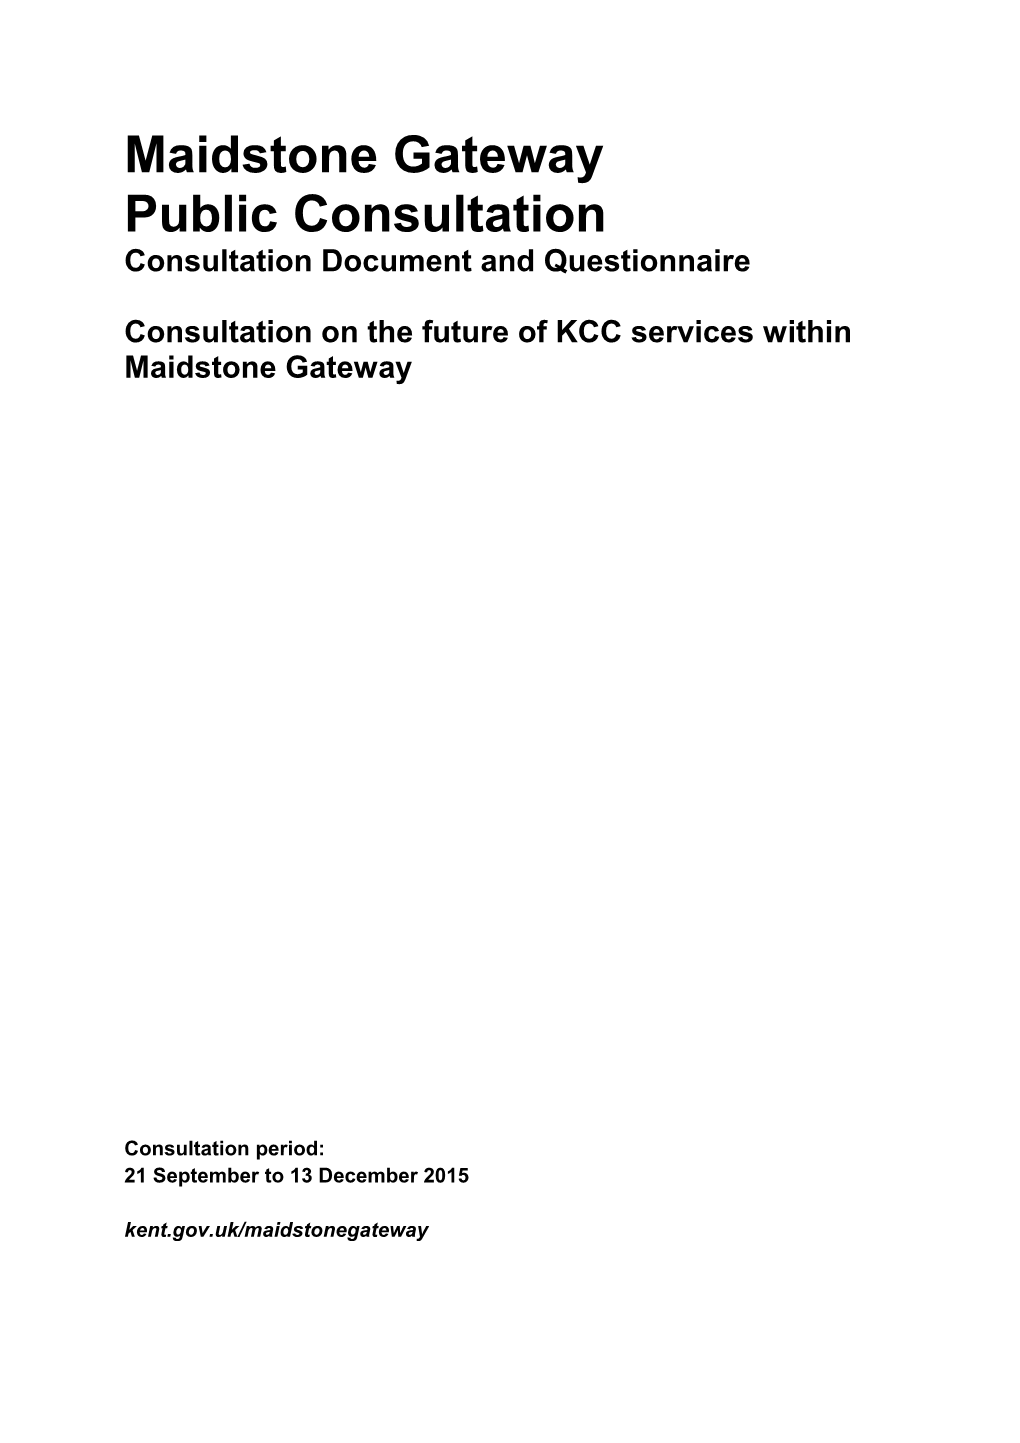 Maidstone Gateway Draft Consultation Document 180815